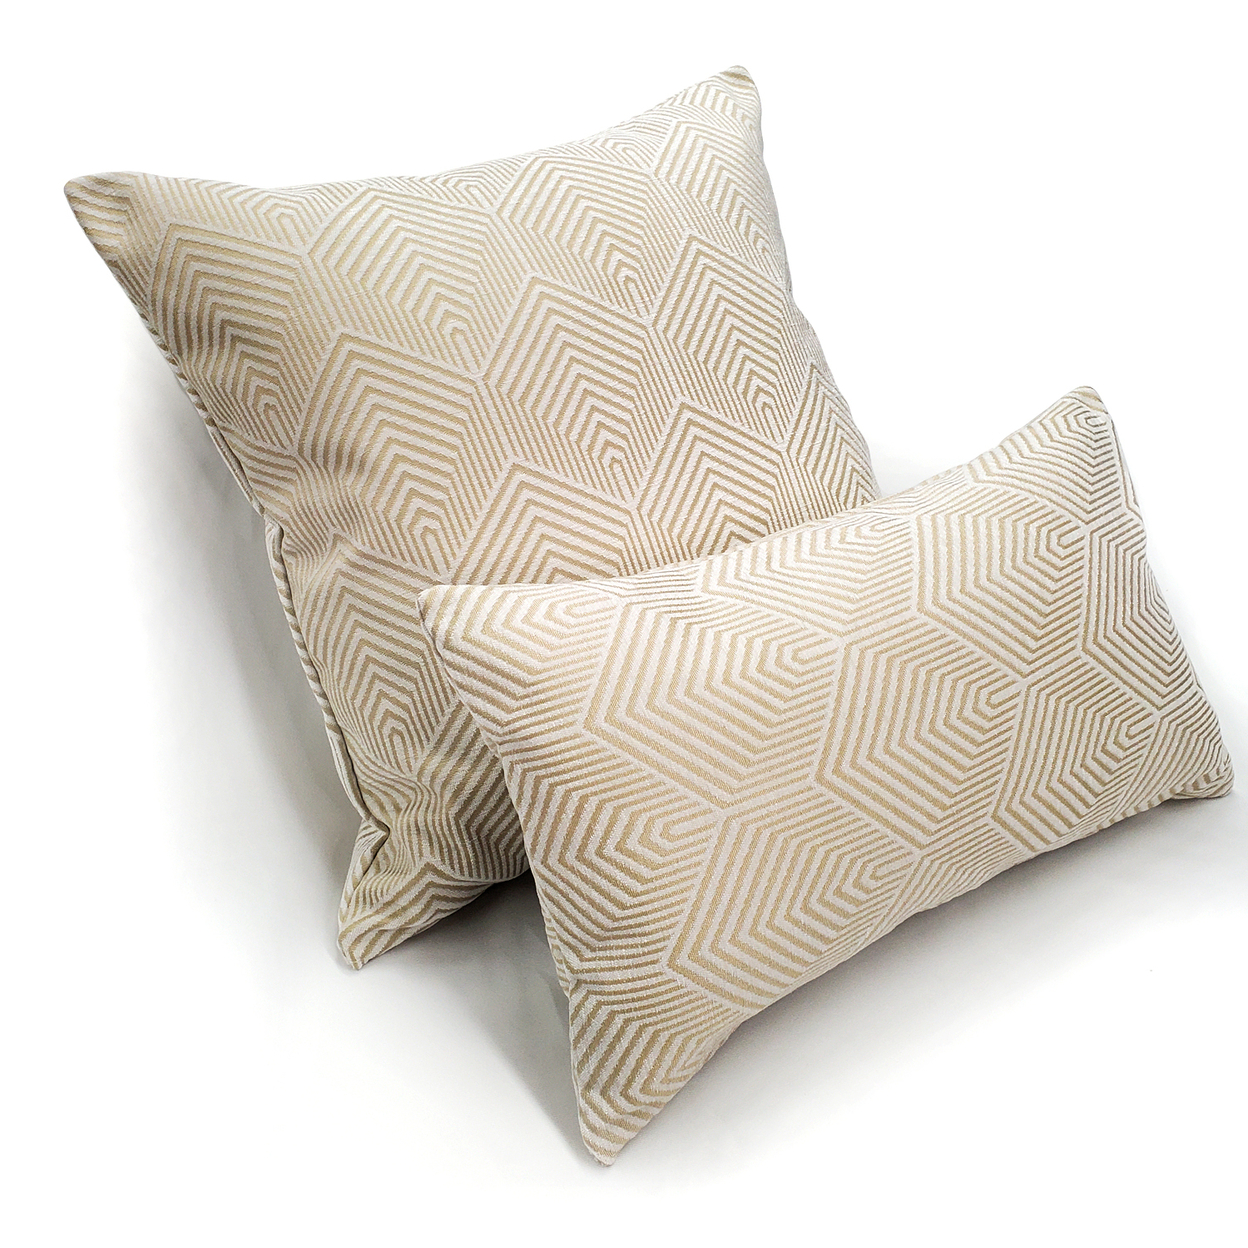 Sahara Cream And Gold Textured Throw Pillow 20x20, With Polyfill Insert